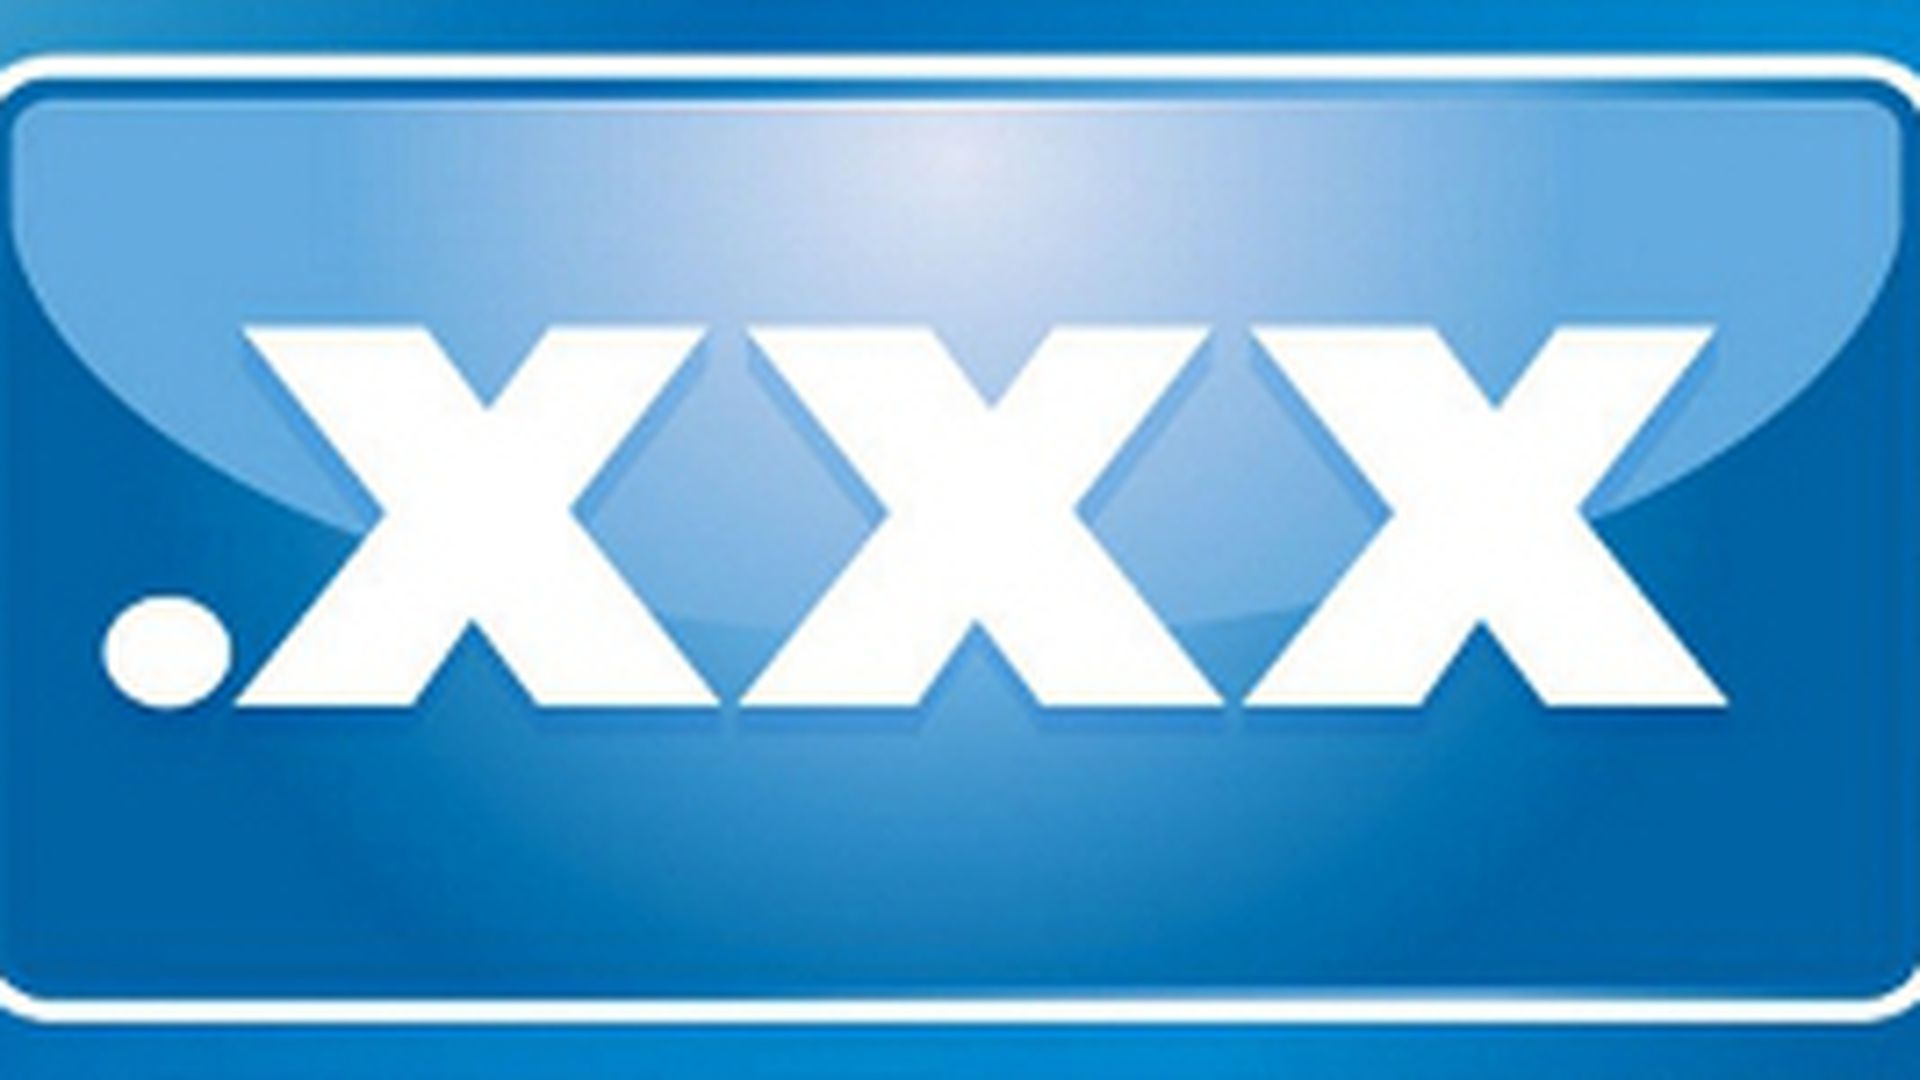 Xxx12yaer - Comienzan a registrarse los dominios .xxx